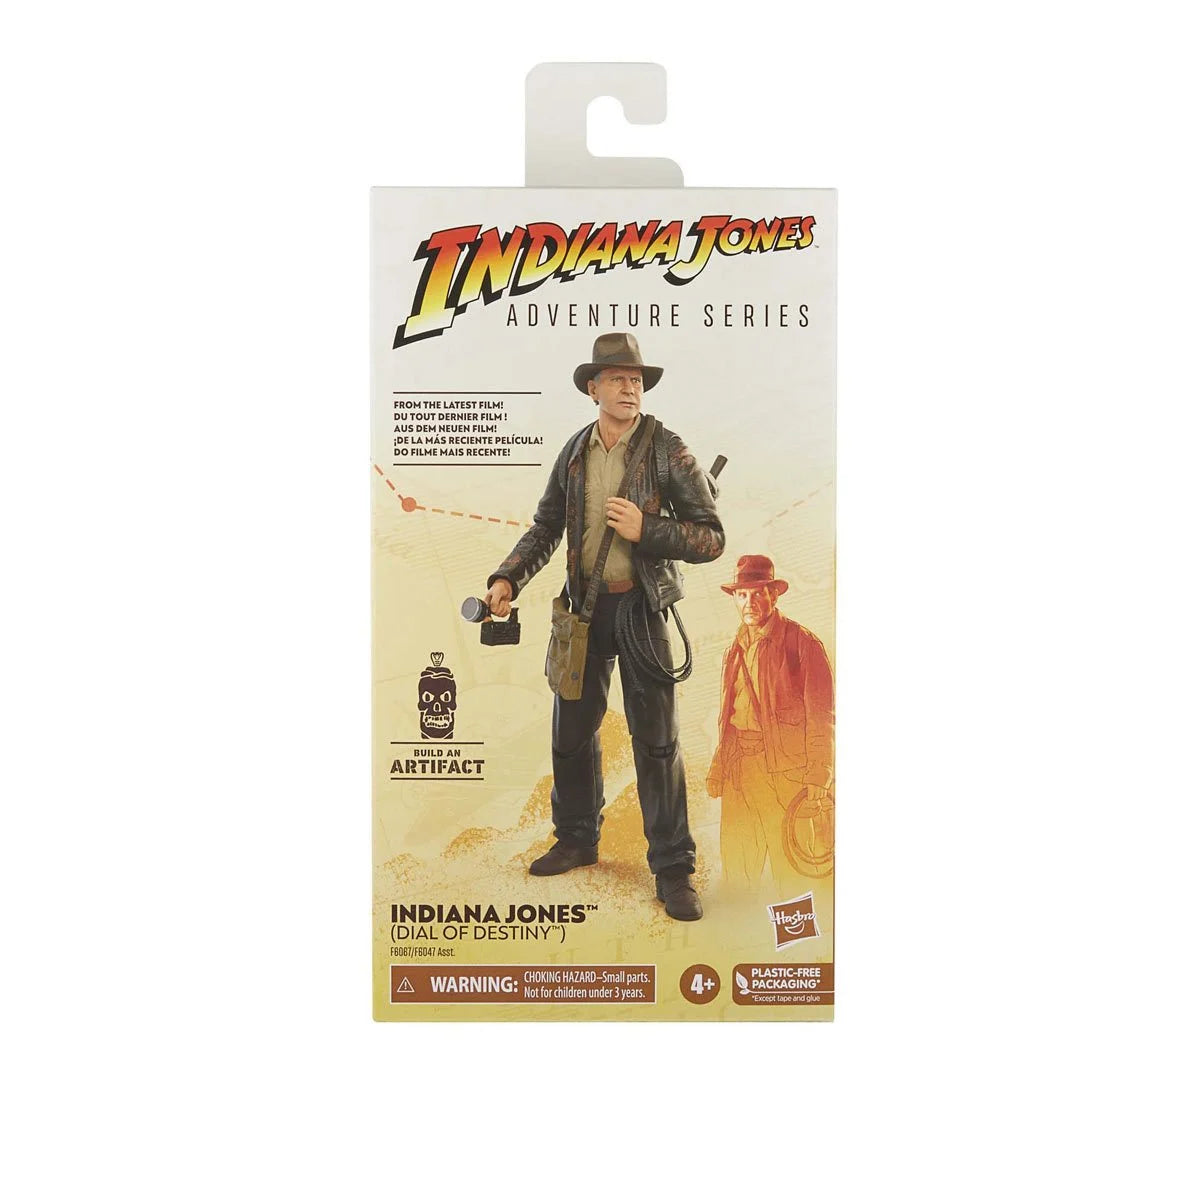 Indiana Jones Adventure Series Indiana Jones (Dial of Destiny) 6-inch Action Figure - Heretoserveyou